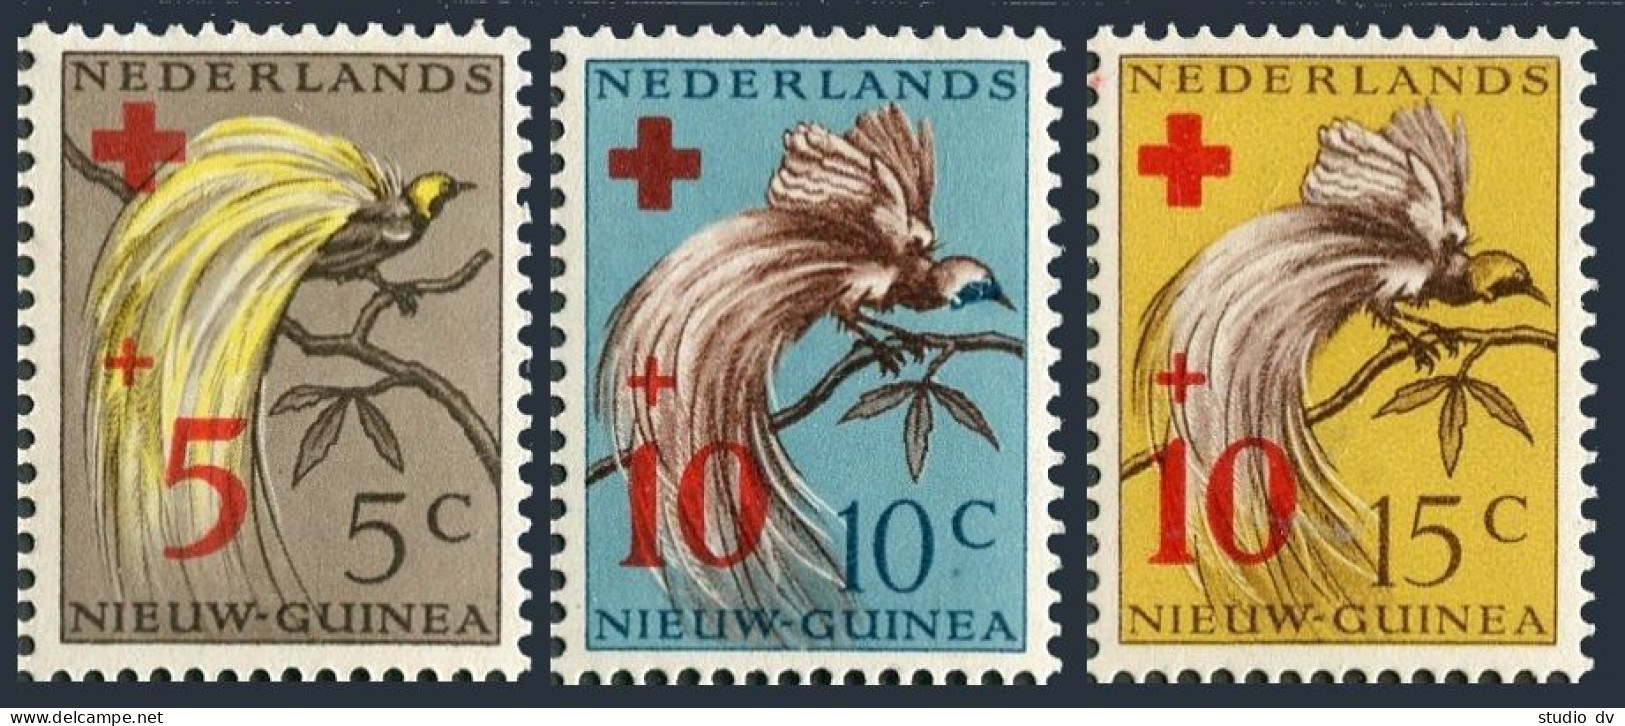 Neth New Guinea B4-B6, Hinged. Michel 38-40. Bird Of Paradise, Red Cross 1955. - Guinea (1958-...)